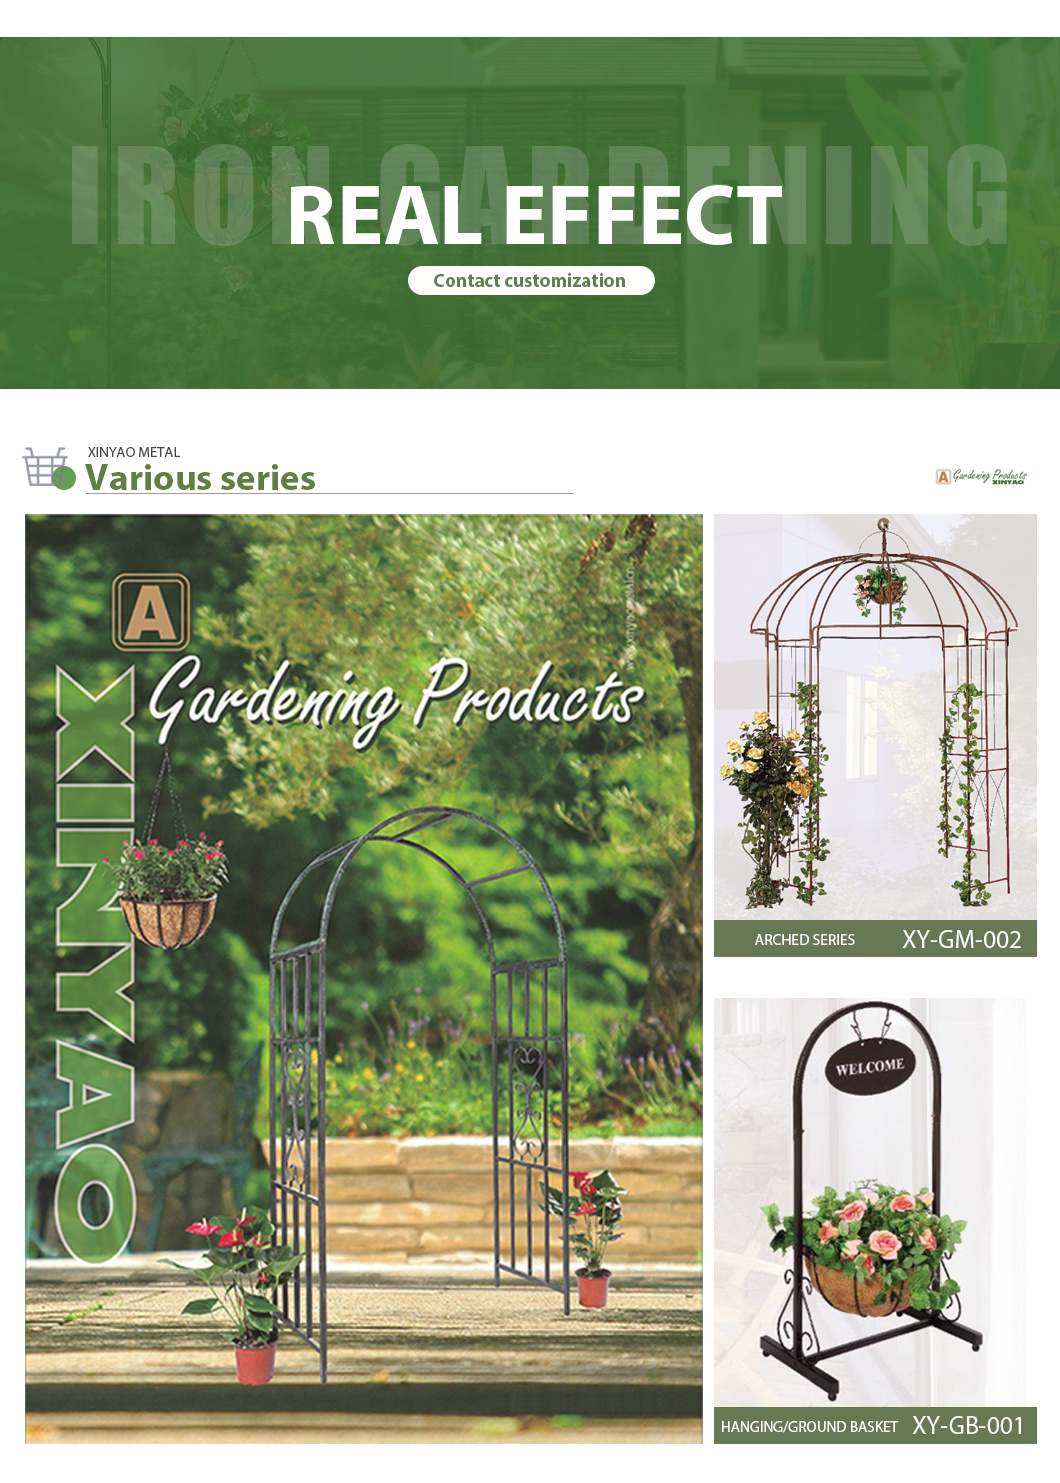 Metal Trellis for Flowers Iron Wire Garden Obelisk for Plants (3 sizes)